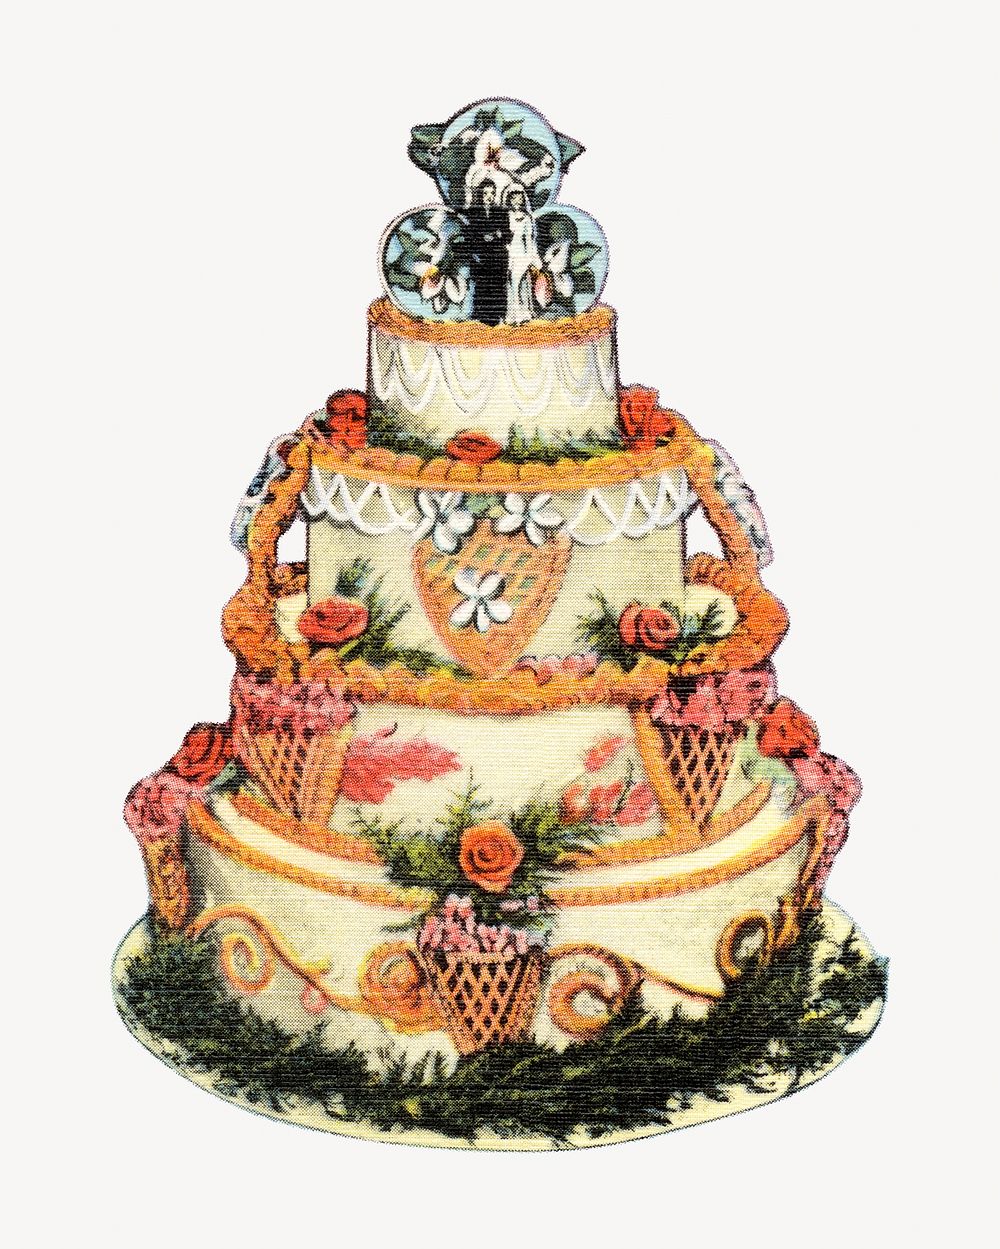 Vintage wedding cake, food illustration. Remixed by rawpixel.